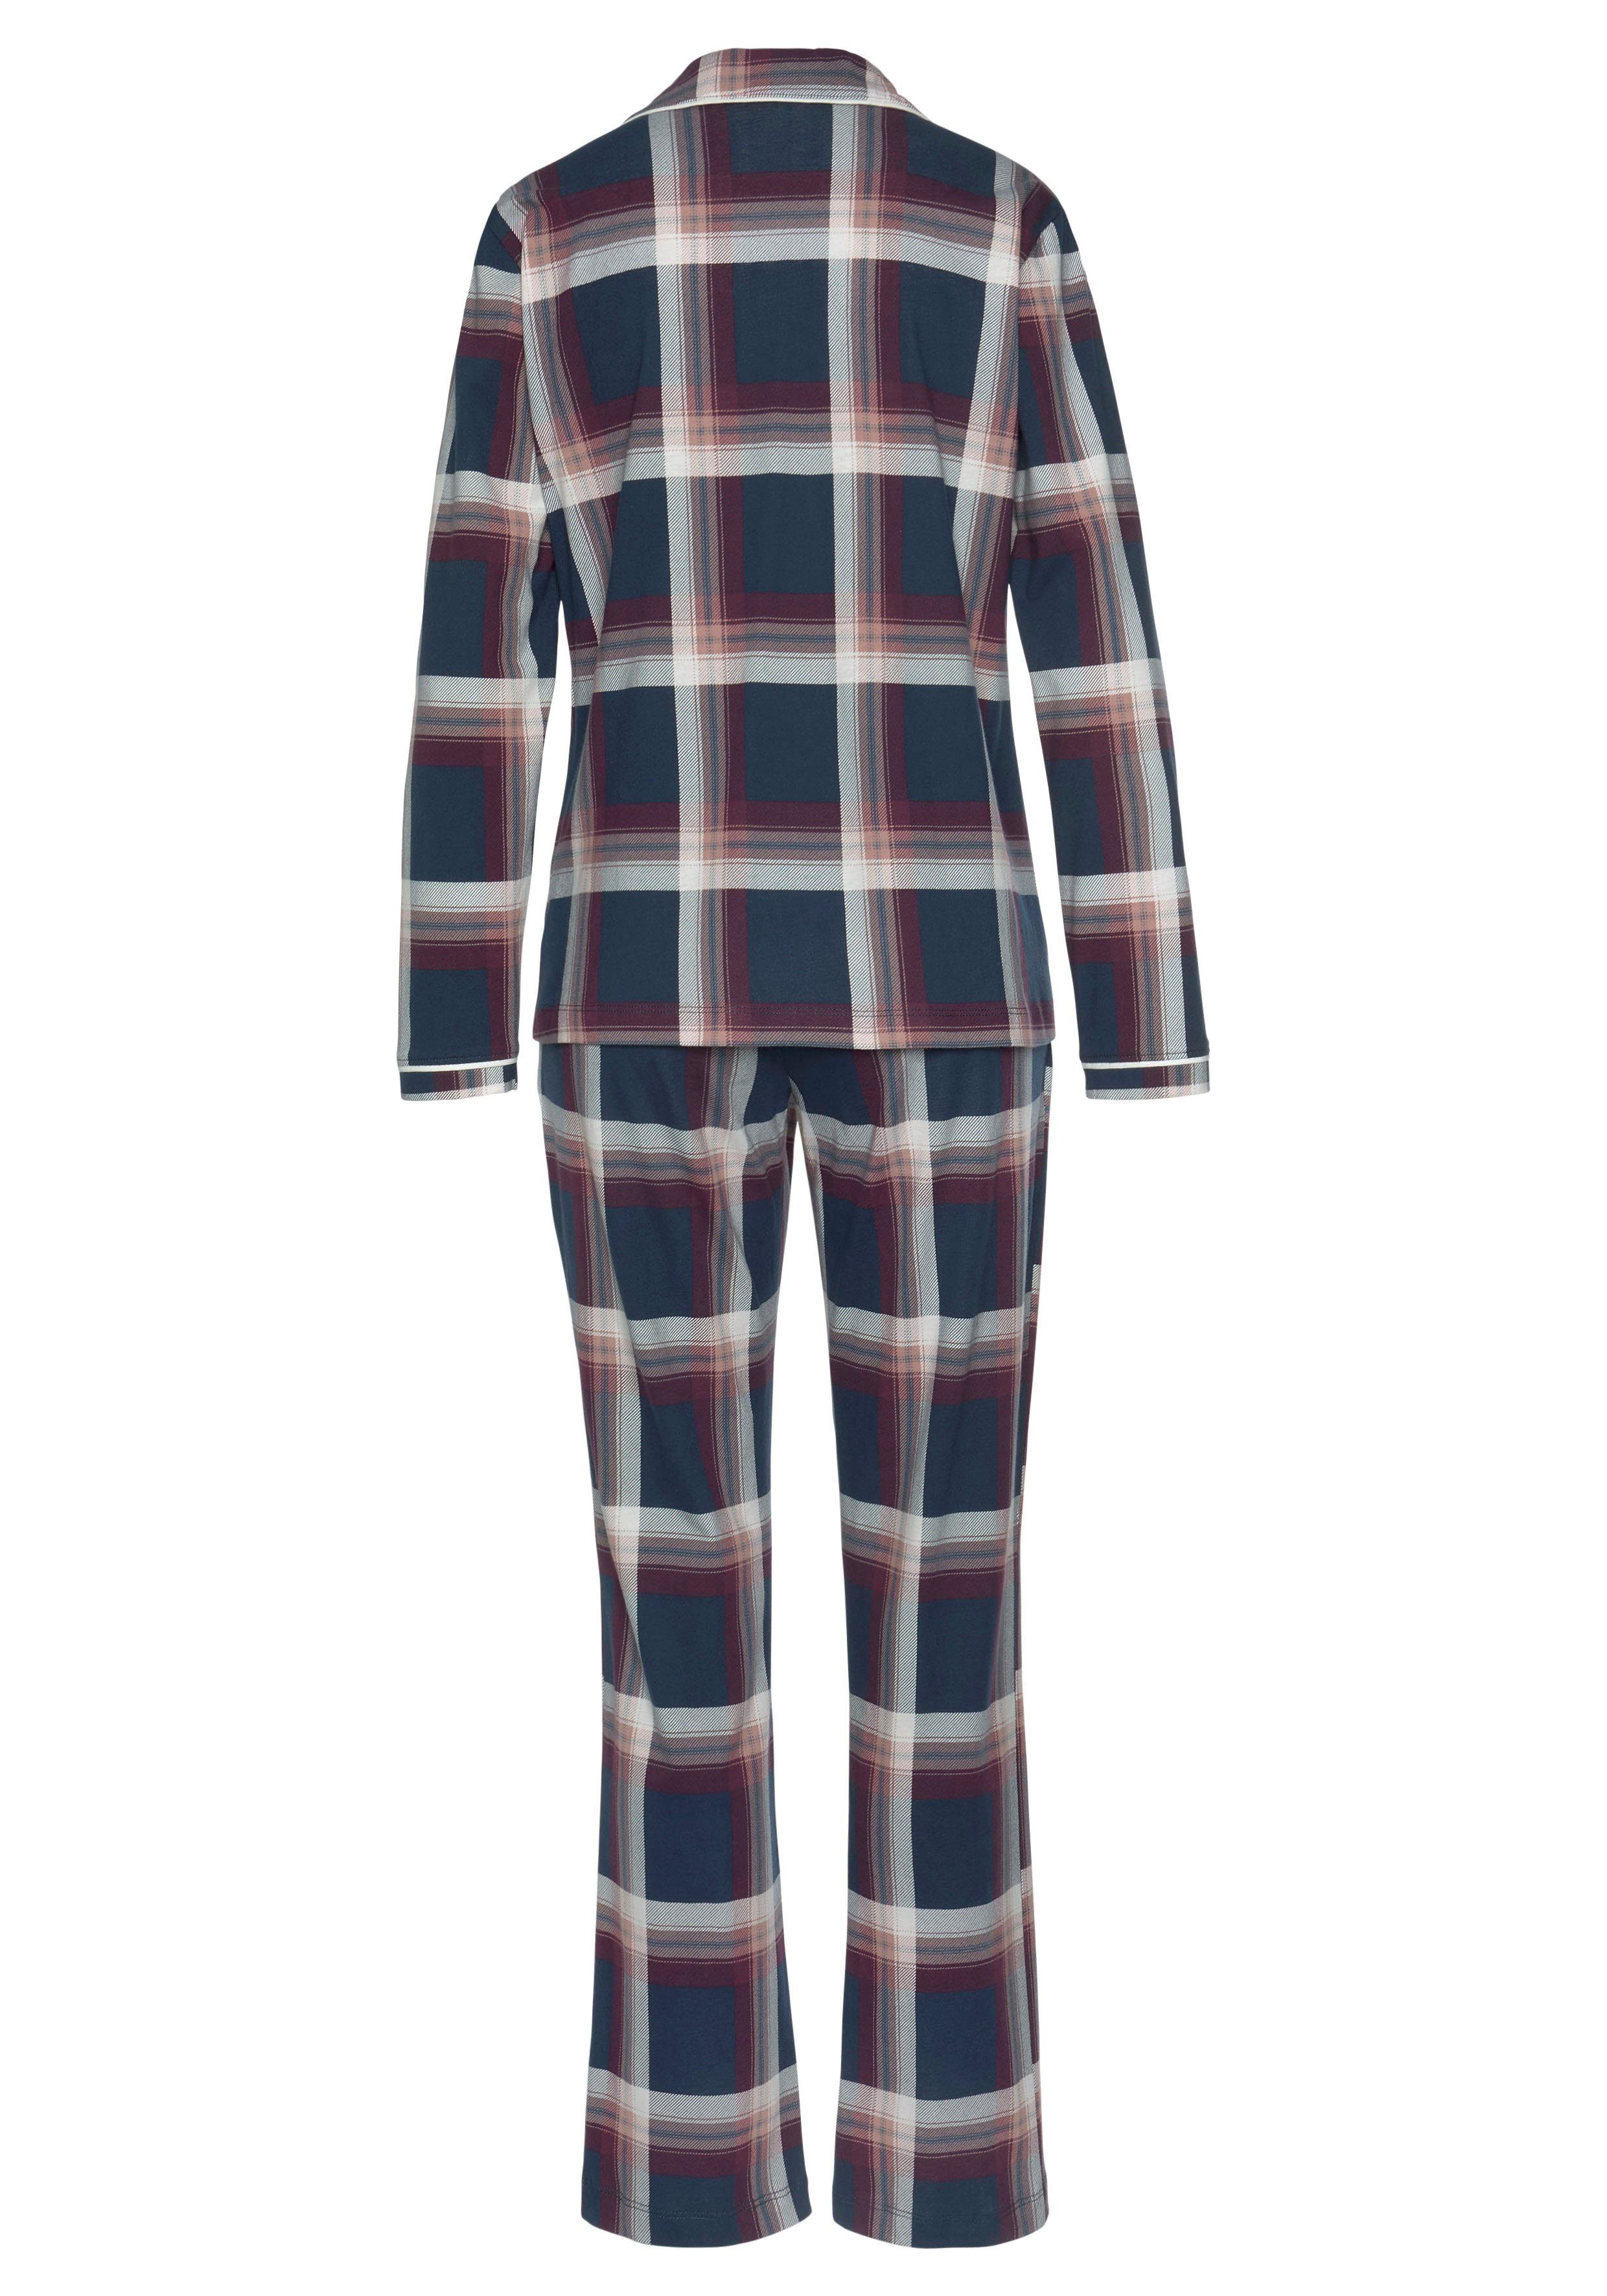 klassischen Pyjama (2 Karo-Muster s.Oliver im tlg)